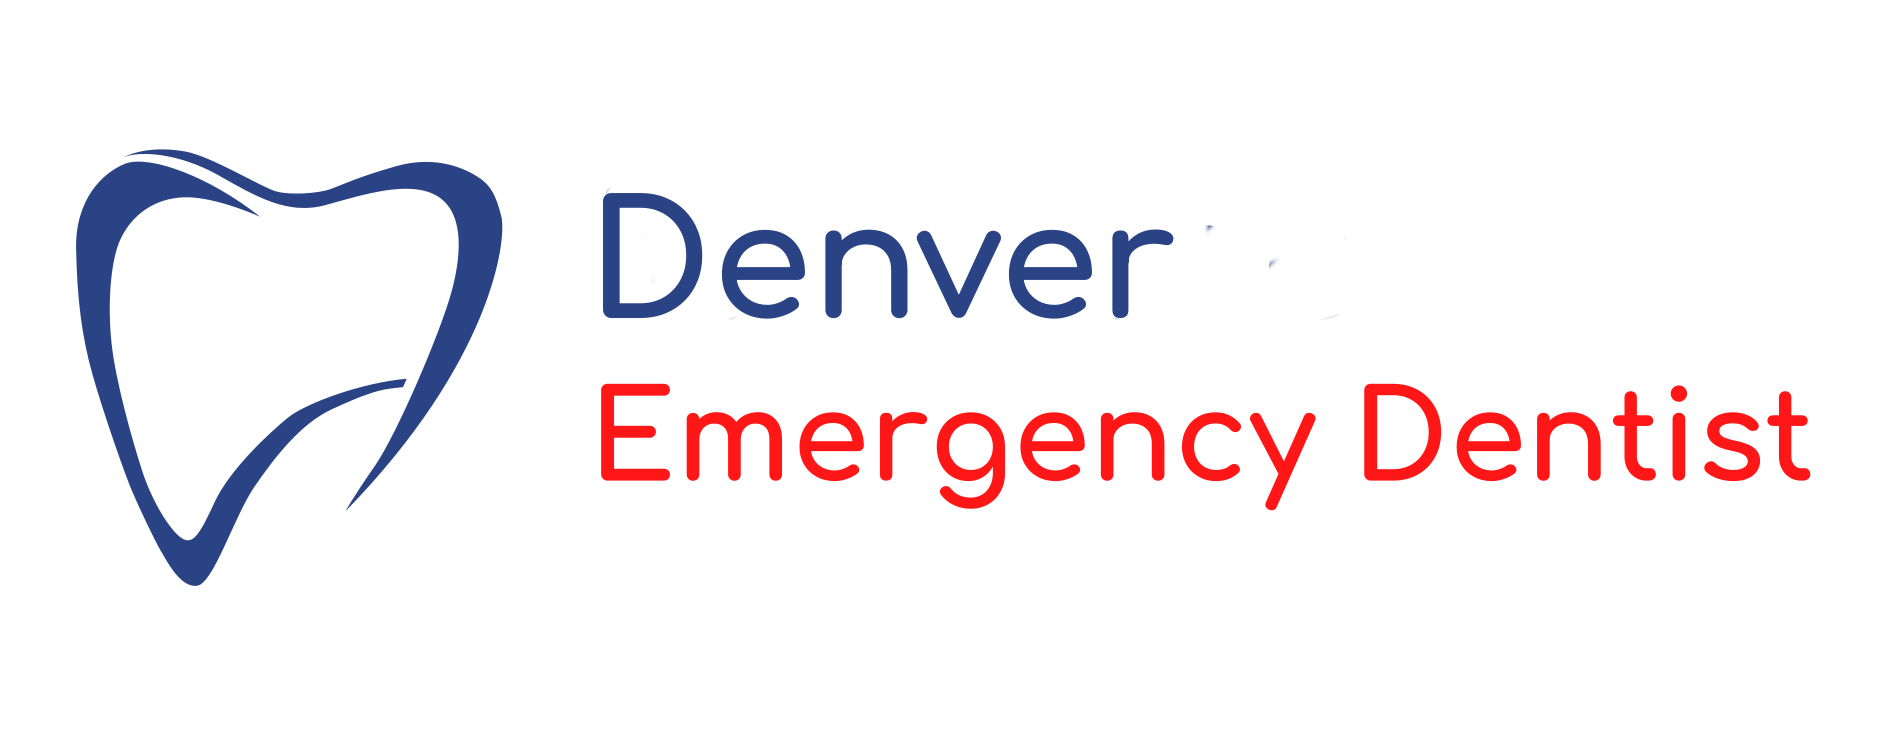 Emergency Dentist in Denver